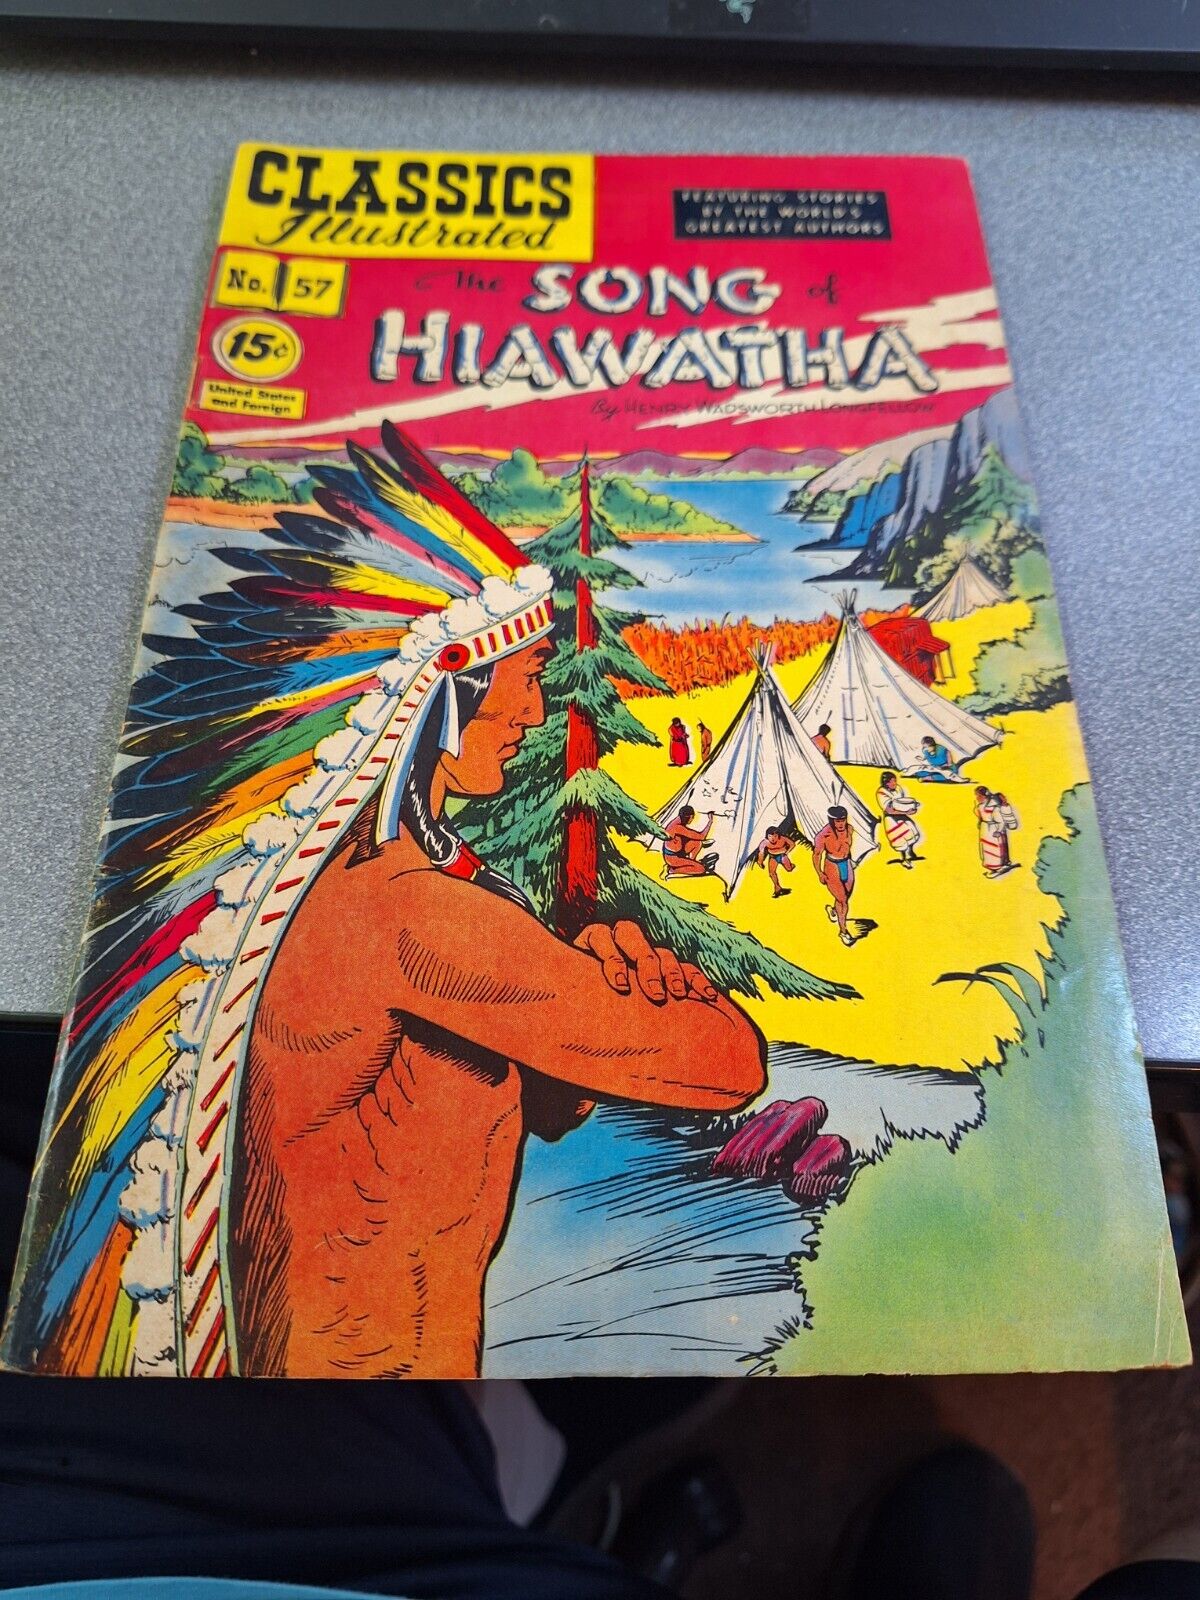 Classics Illustrated #57 Song of Hiawatha FINE HRN 118 /9-194